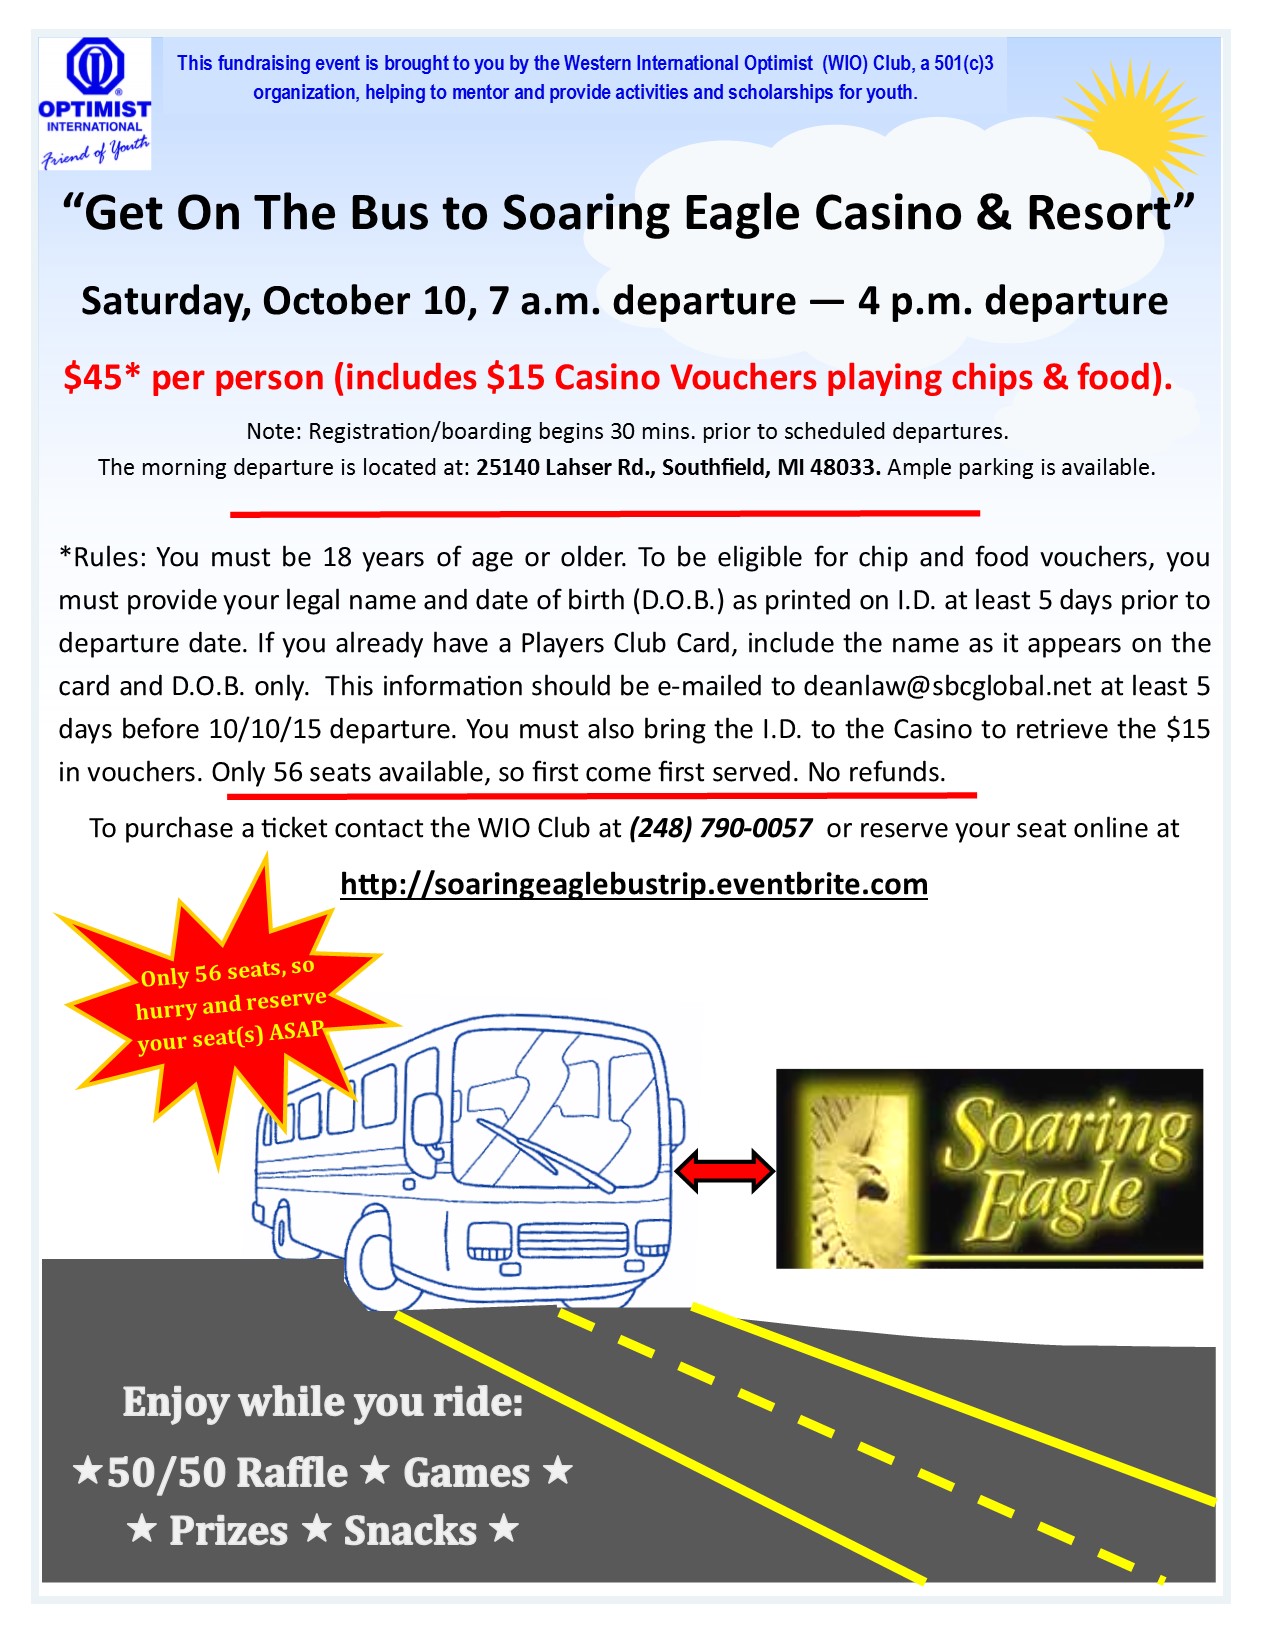 soaring eagle casino and resort rv show